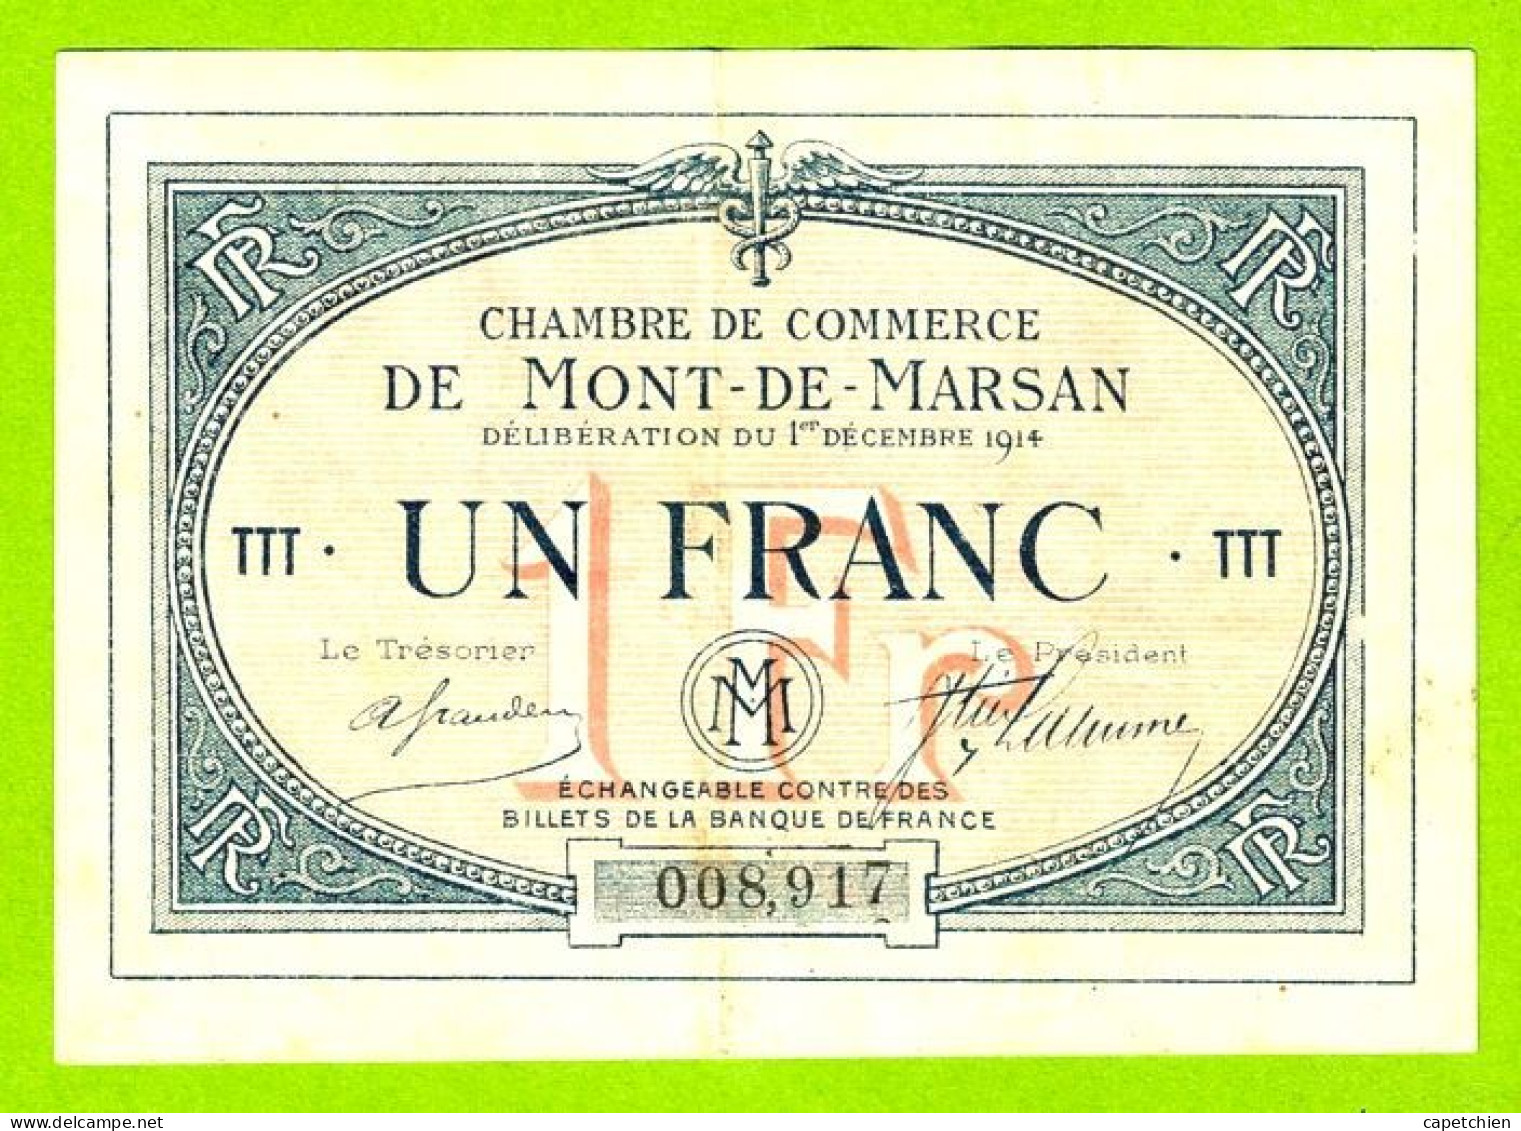 FRANCE / CHAMBRE De COMMERCE / MONT DE MARSAN / 1 FRANC / 1er DECEMBRE 1914 / 008917 / SERIE Ttt - Camera Di Commercio